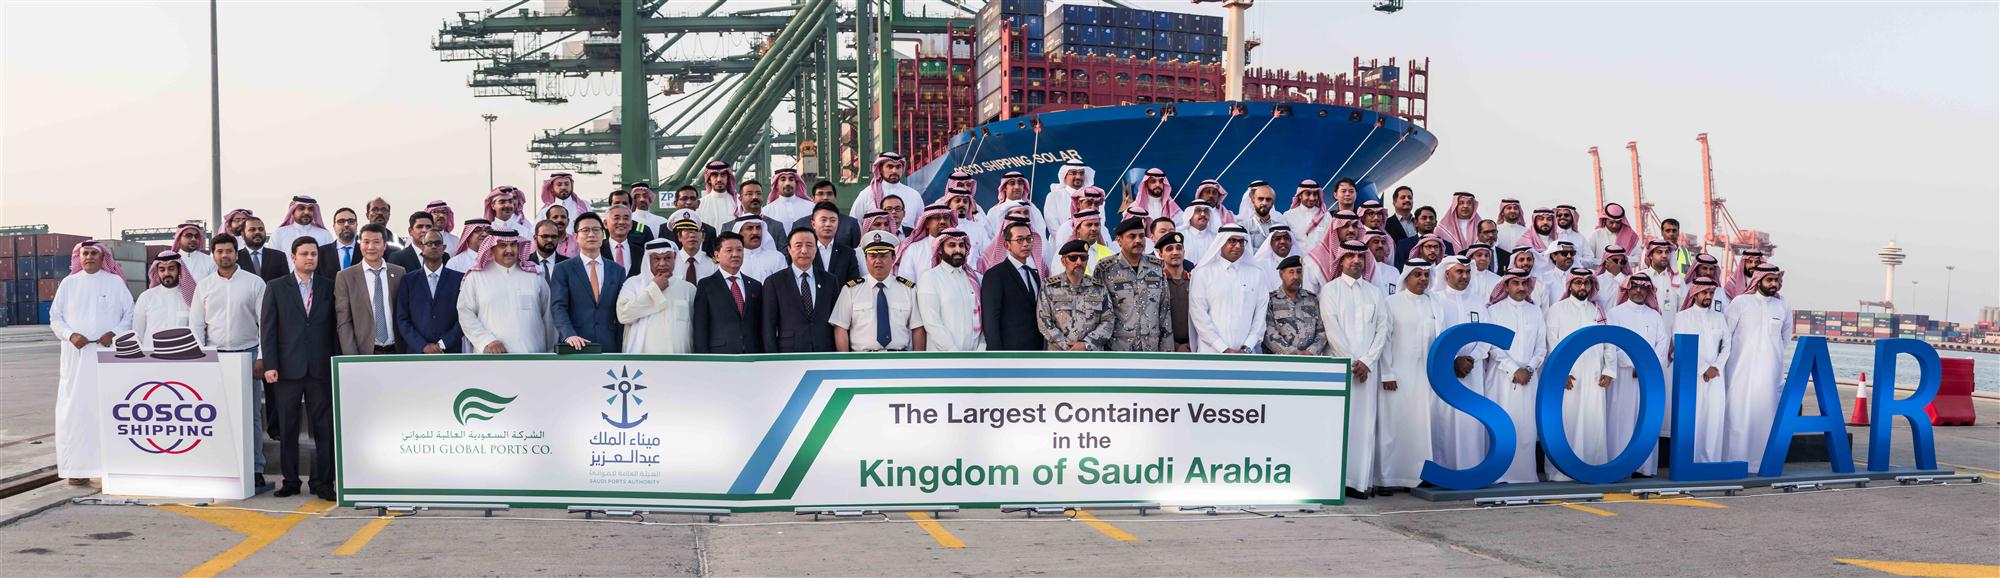 Self Photos / Files - Saudi Global Ports welcomes COSCO SHIPPING SOLAR May 2019